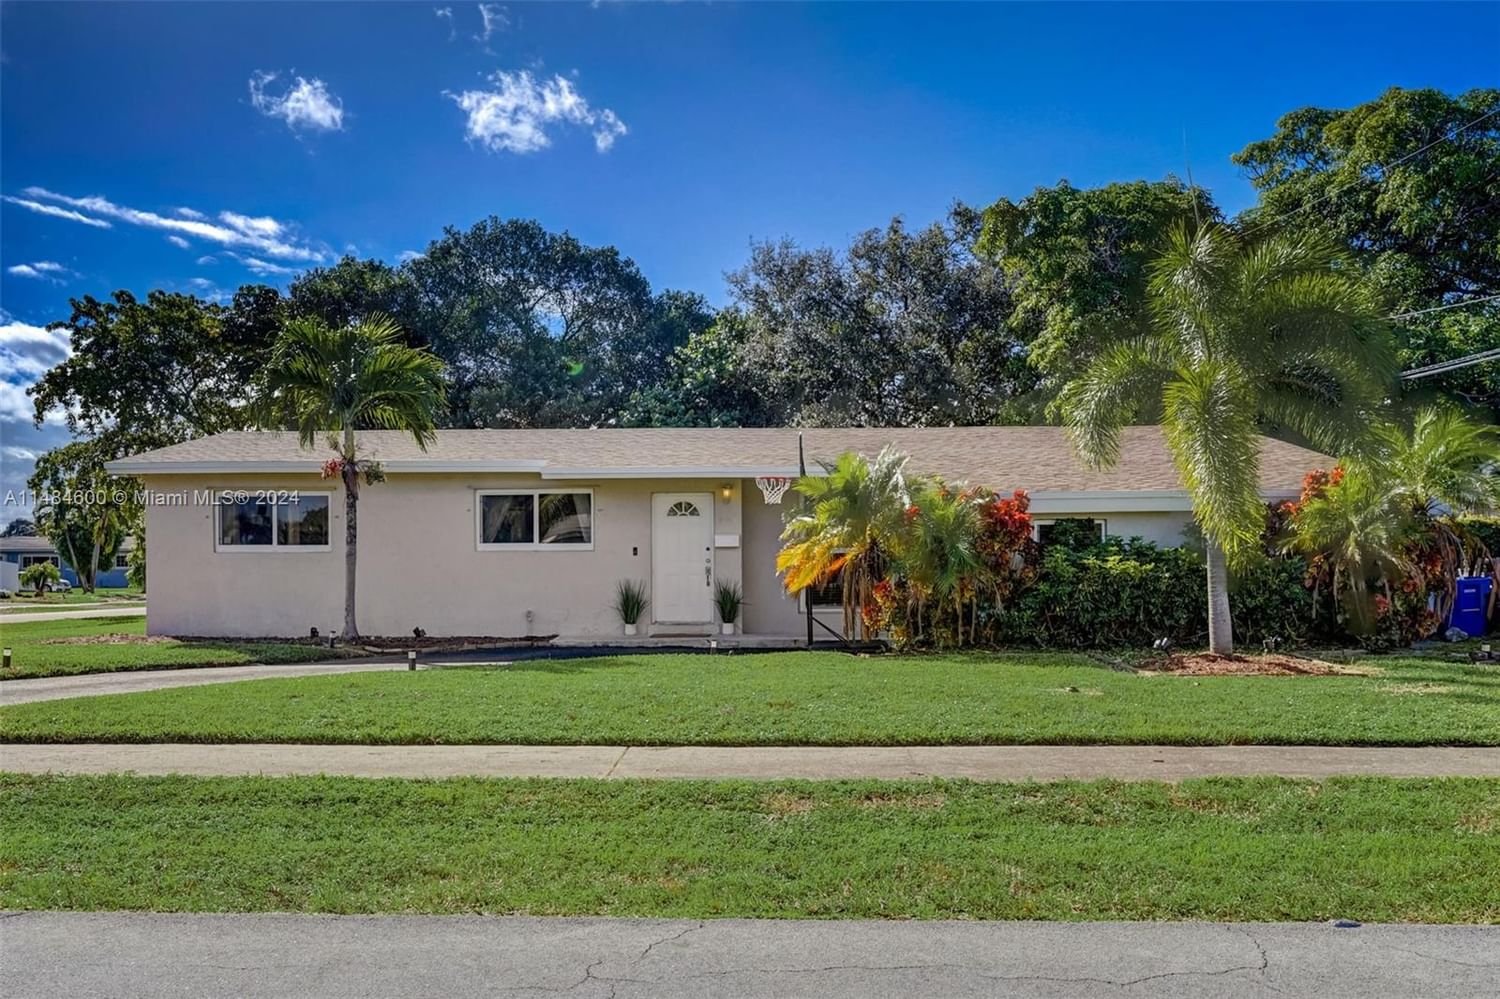 Real estate property located at 940 181st St, Miami-Dade County, SCOTT LAKE MANOR SEC 2, Miami Gardens, FL